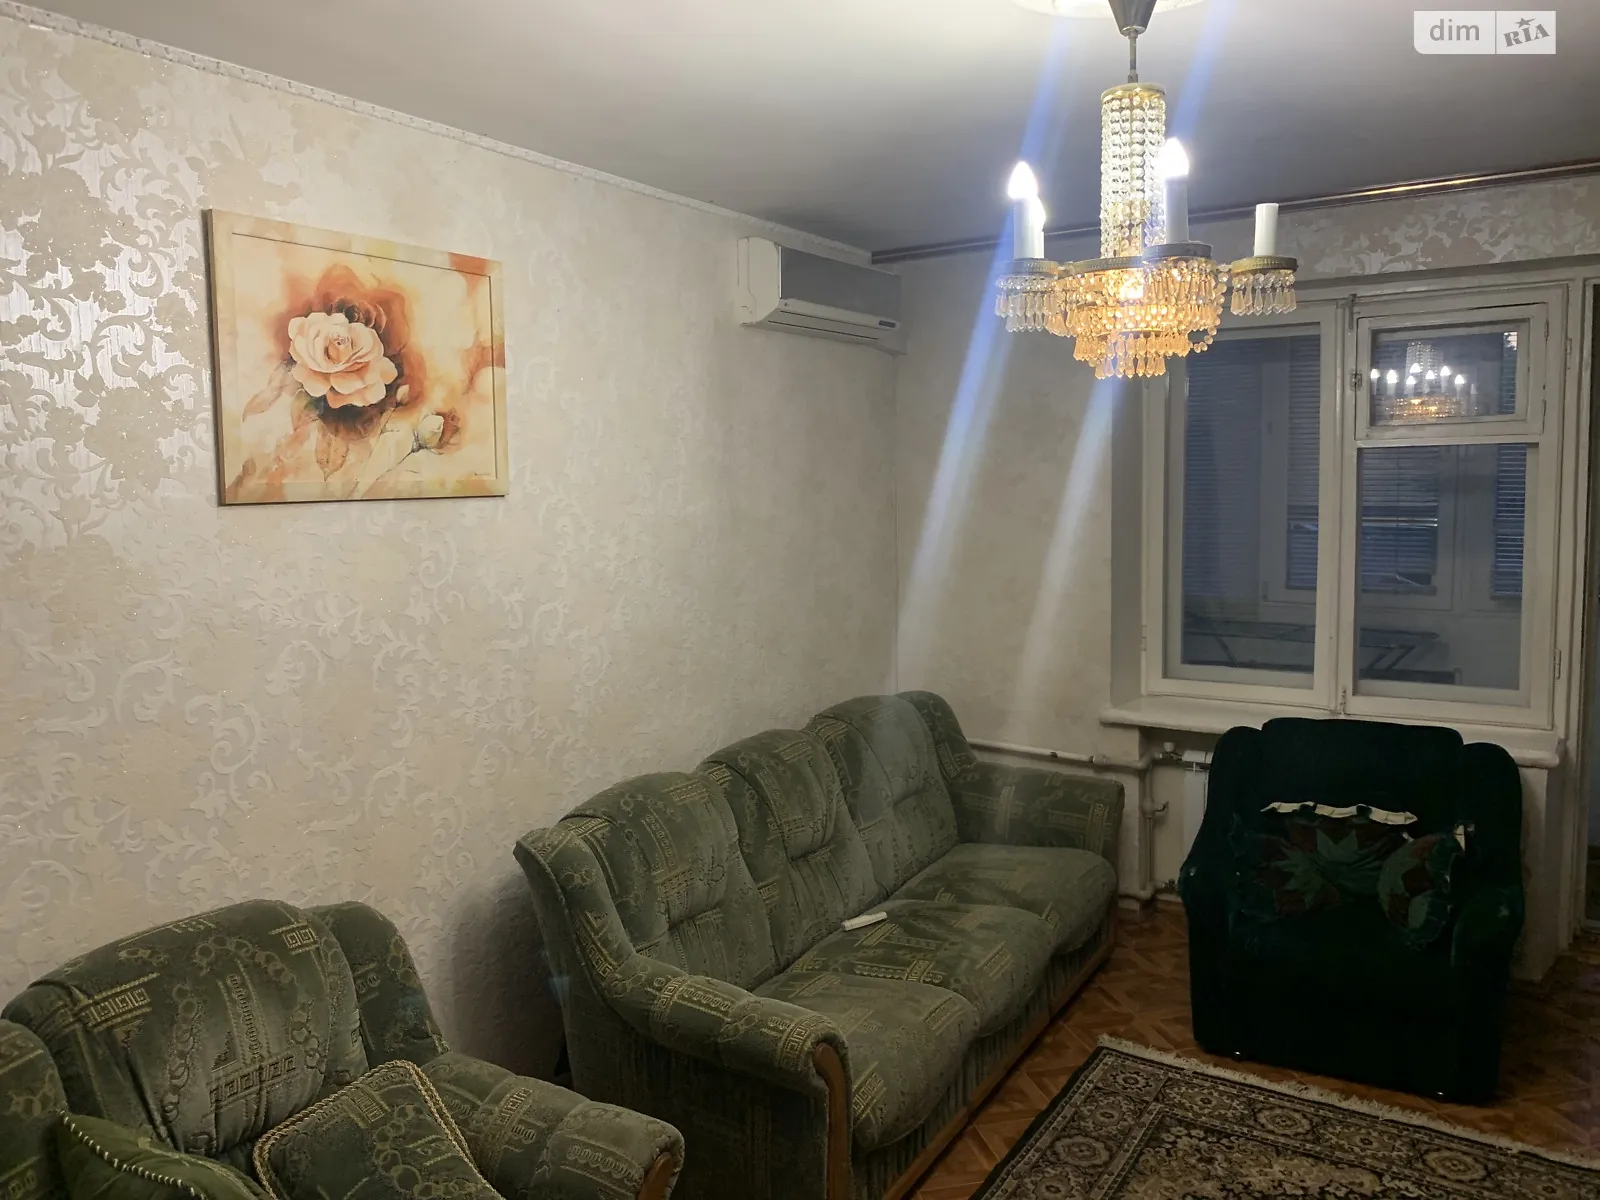 Сдается в аренду 3-комнатная квартира 61 кв. м в Николаеве, ул. Соборная, 3А - фото 1